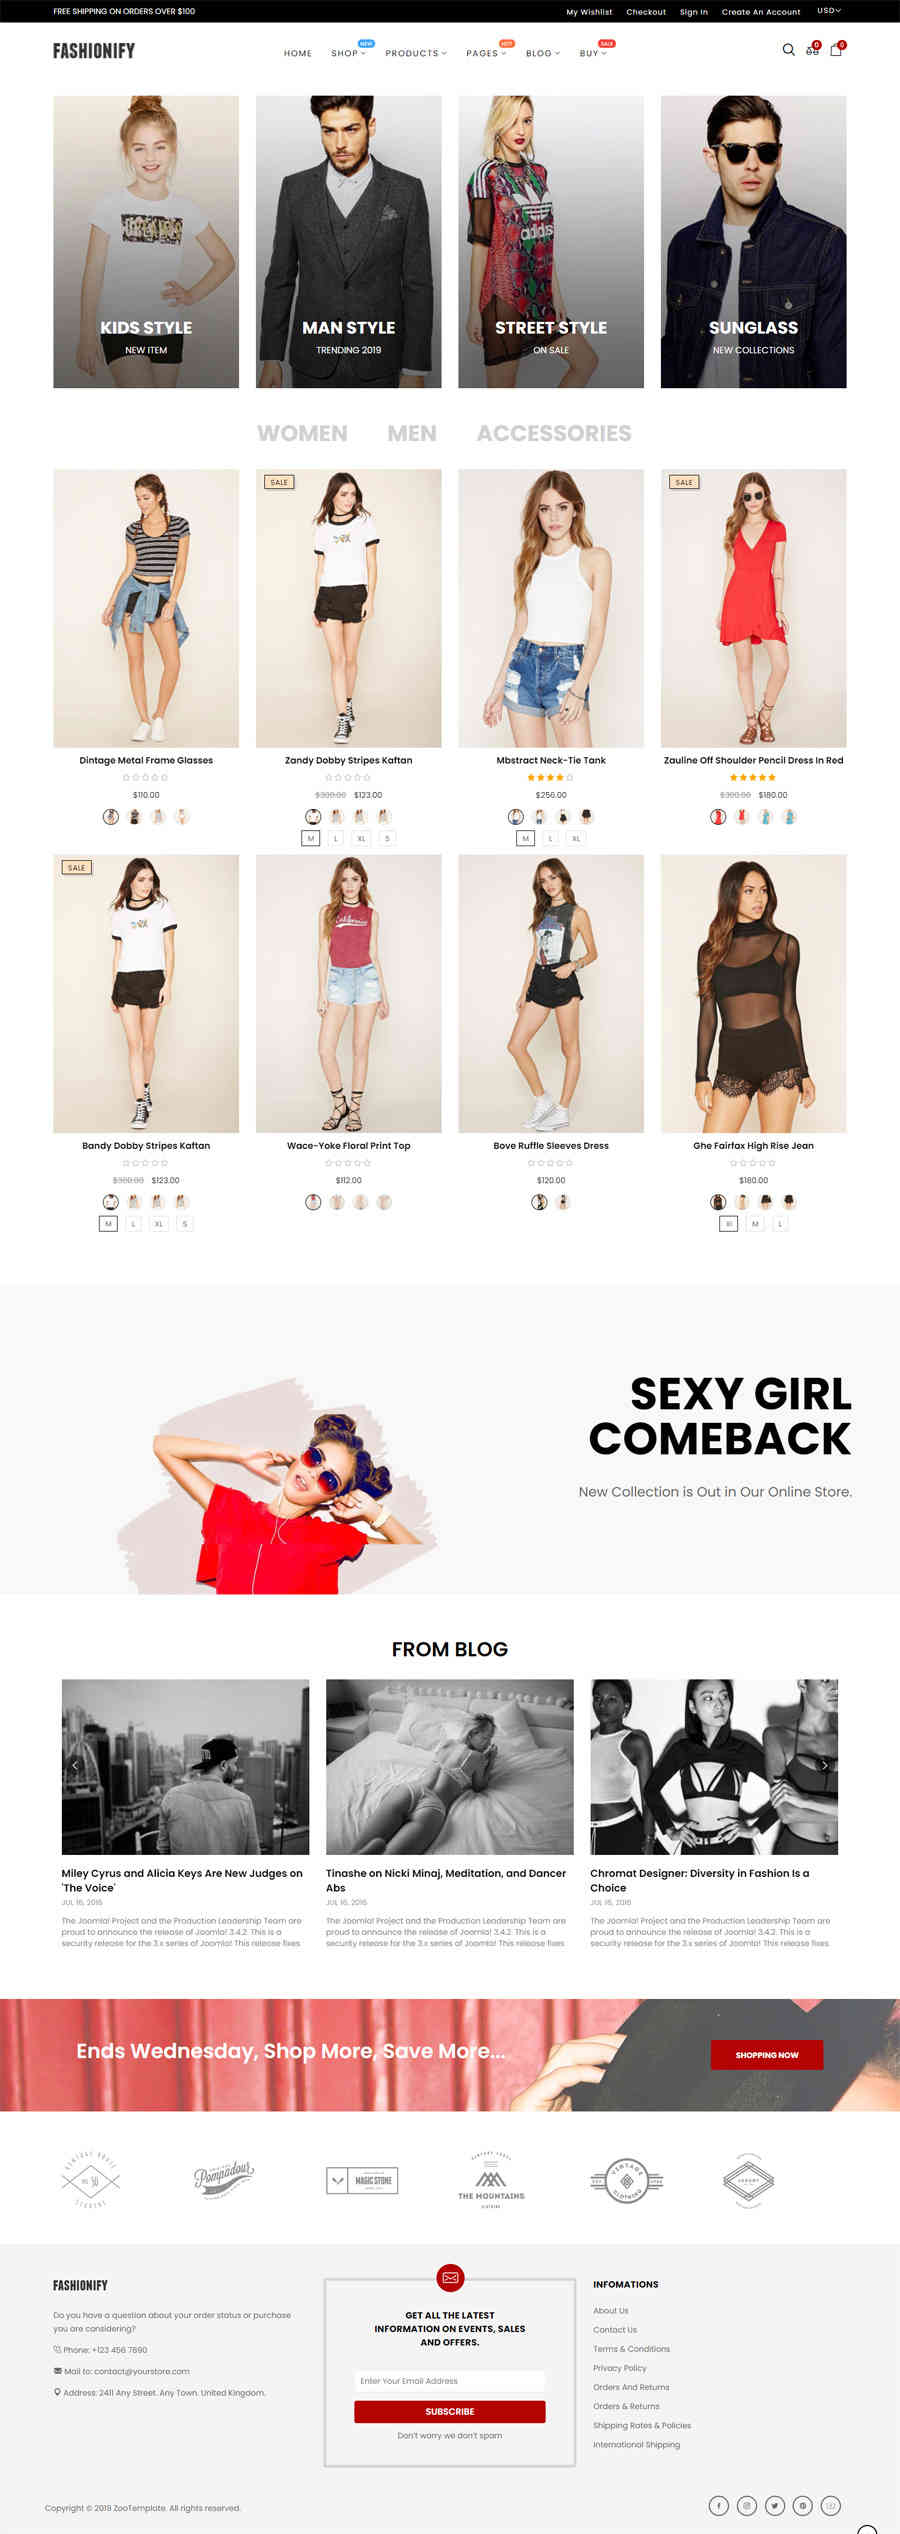 thiet ke website tmi fashion shop 4030